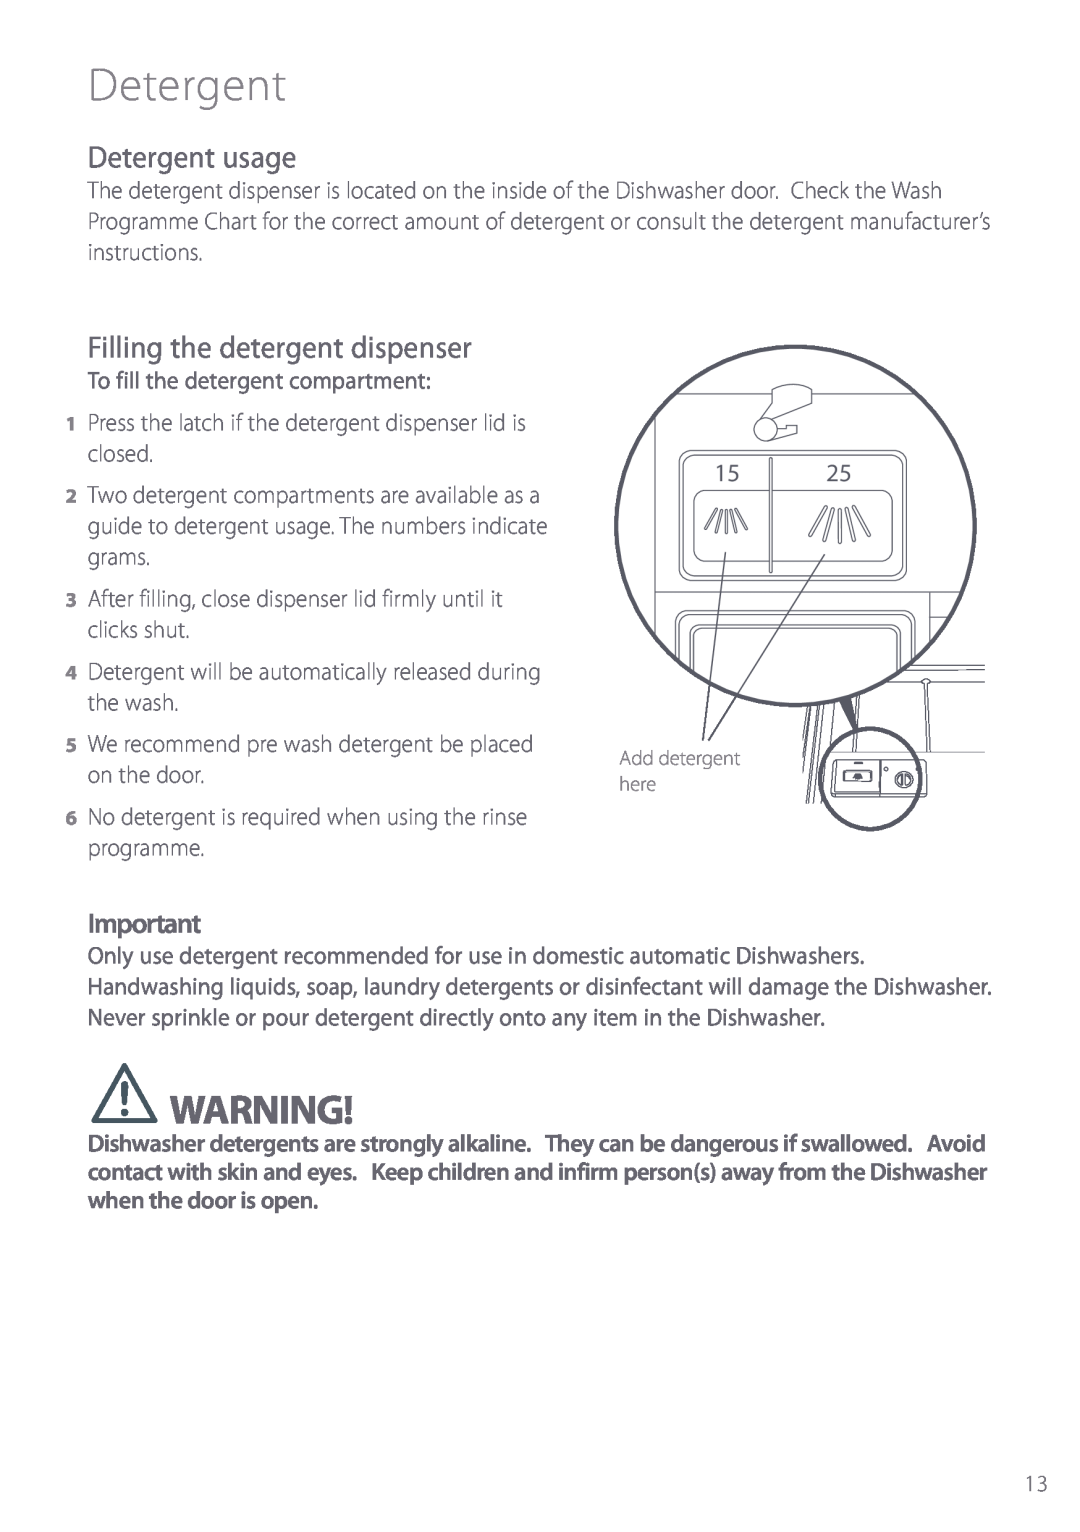 Fisher & Paykel DW820, DW920 installation instructions Detergent usage, Filling the detergent dispenser 